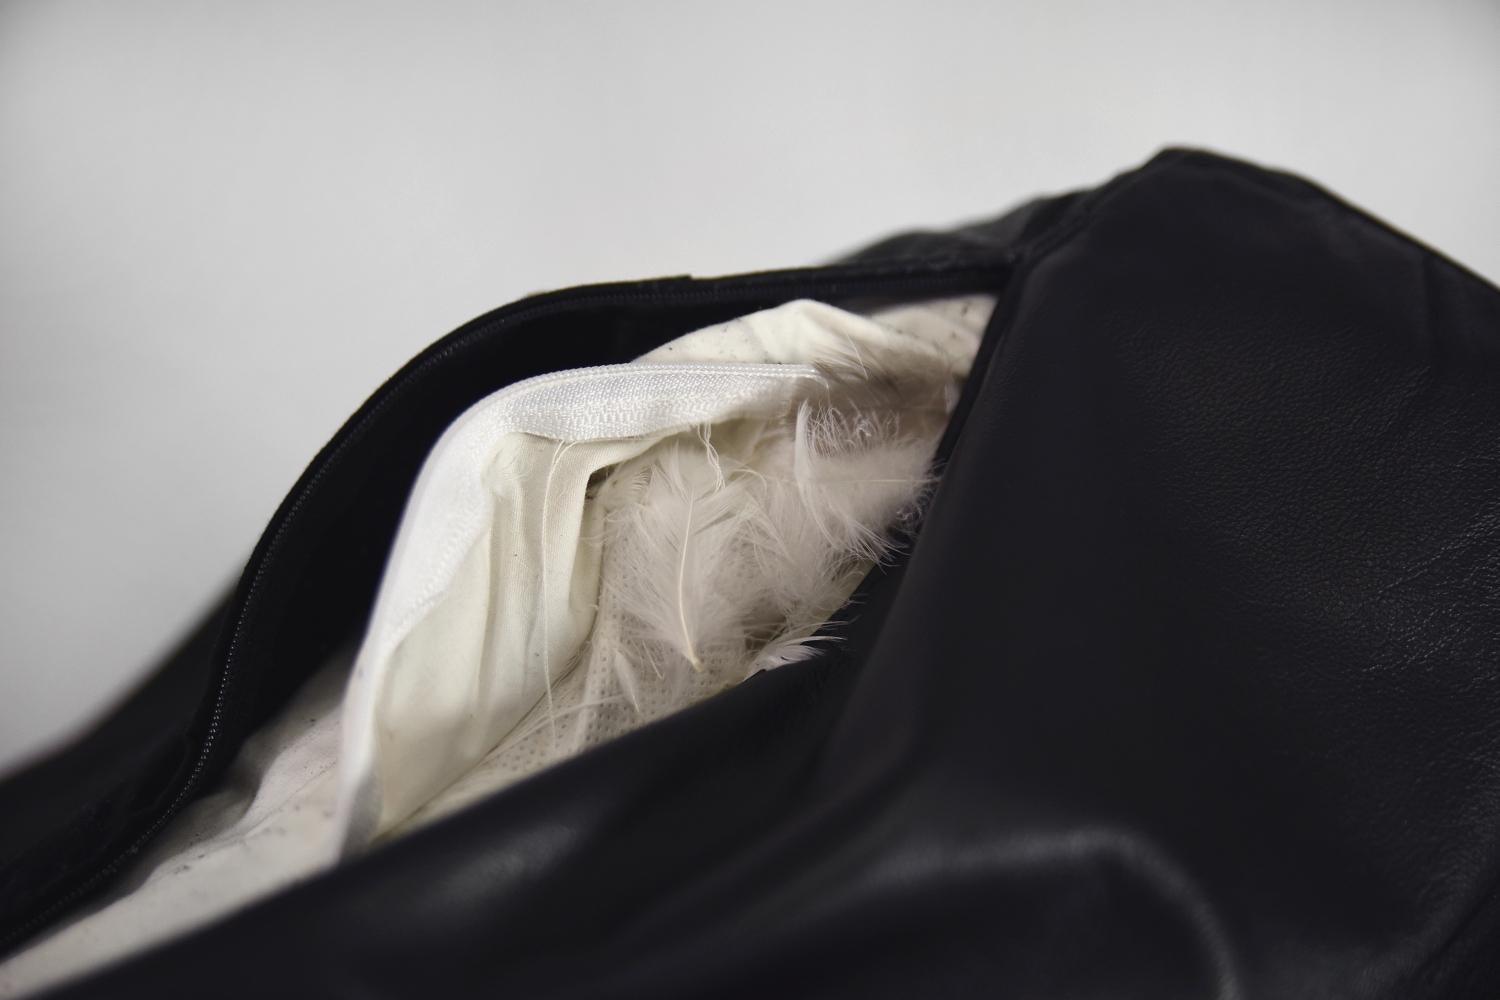 Vintage Elegant Minimalist Black Leather Sofa by Natuzzi Design Center  For Sale 11